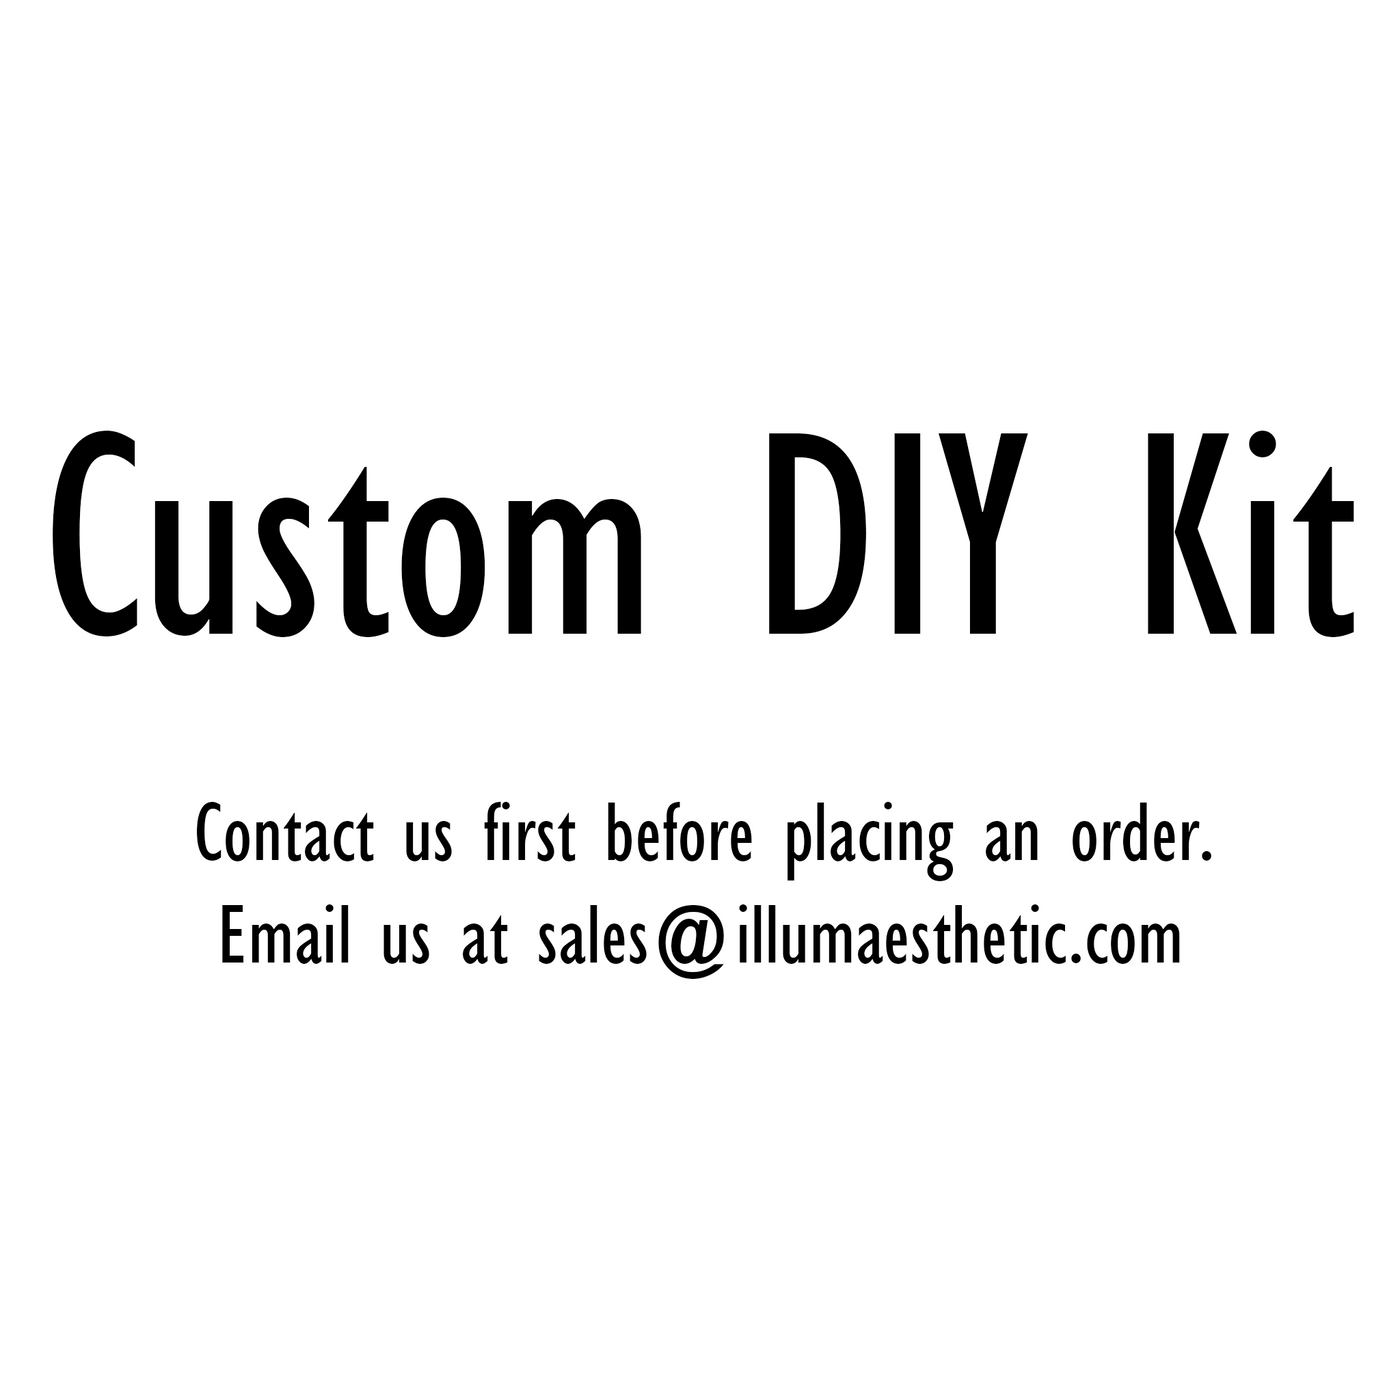 Honda Civic Del Sol (93-98) - Complete DIY Kit